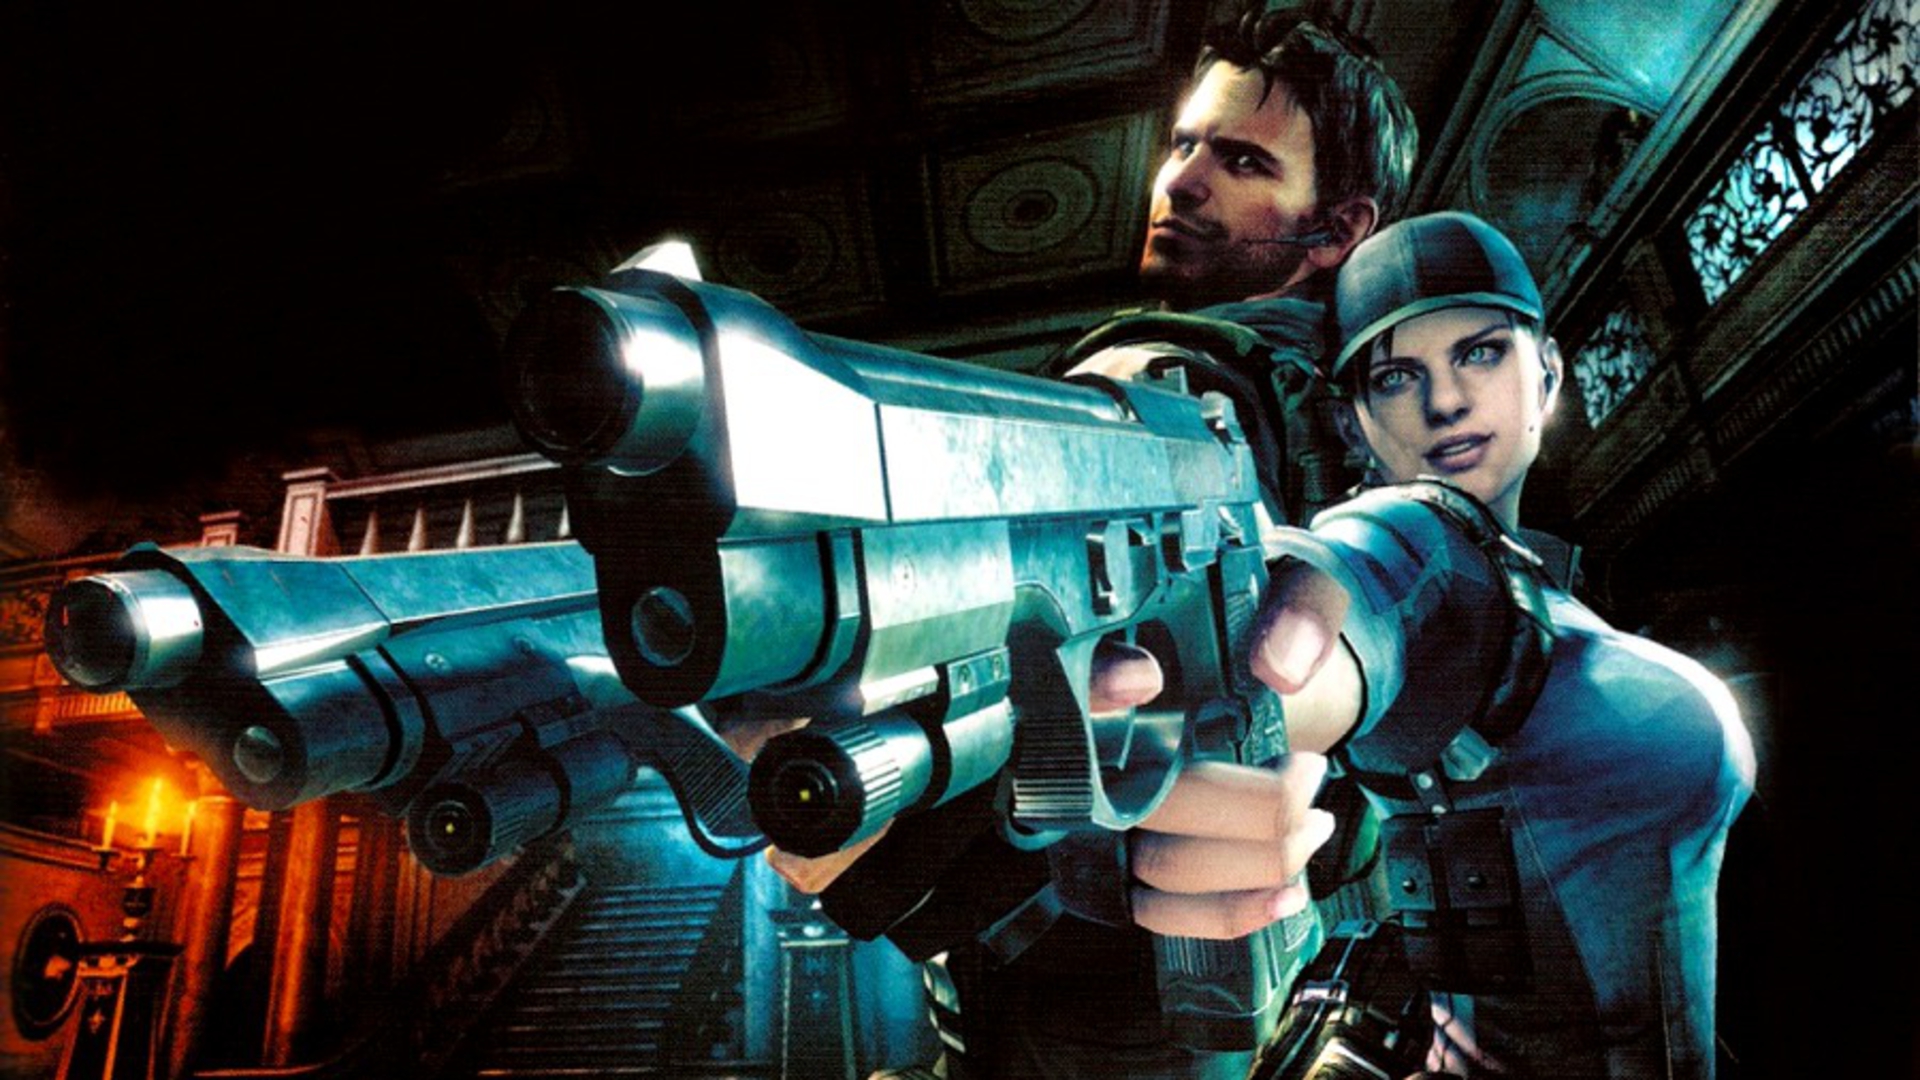 Resident Evil 5 HD Wallpaper | Background Image ...